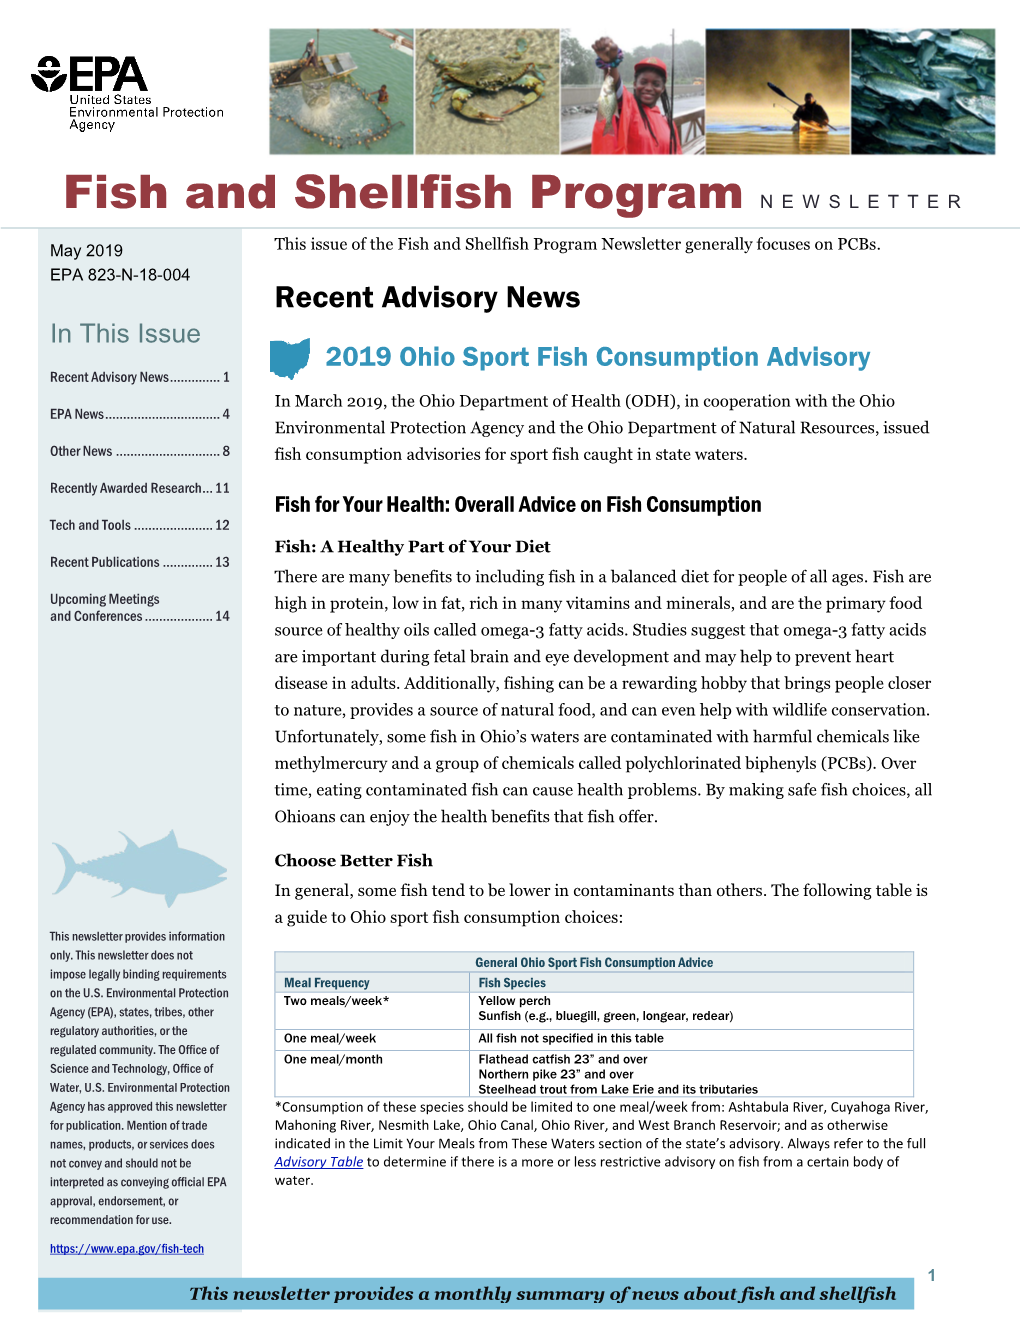 Fish and Shellfish Program Newsletter – May 2019